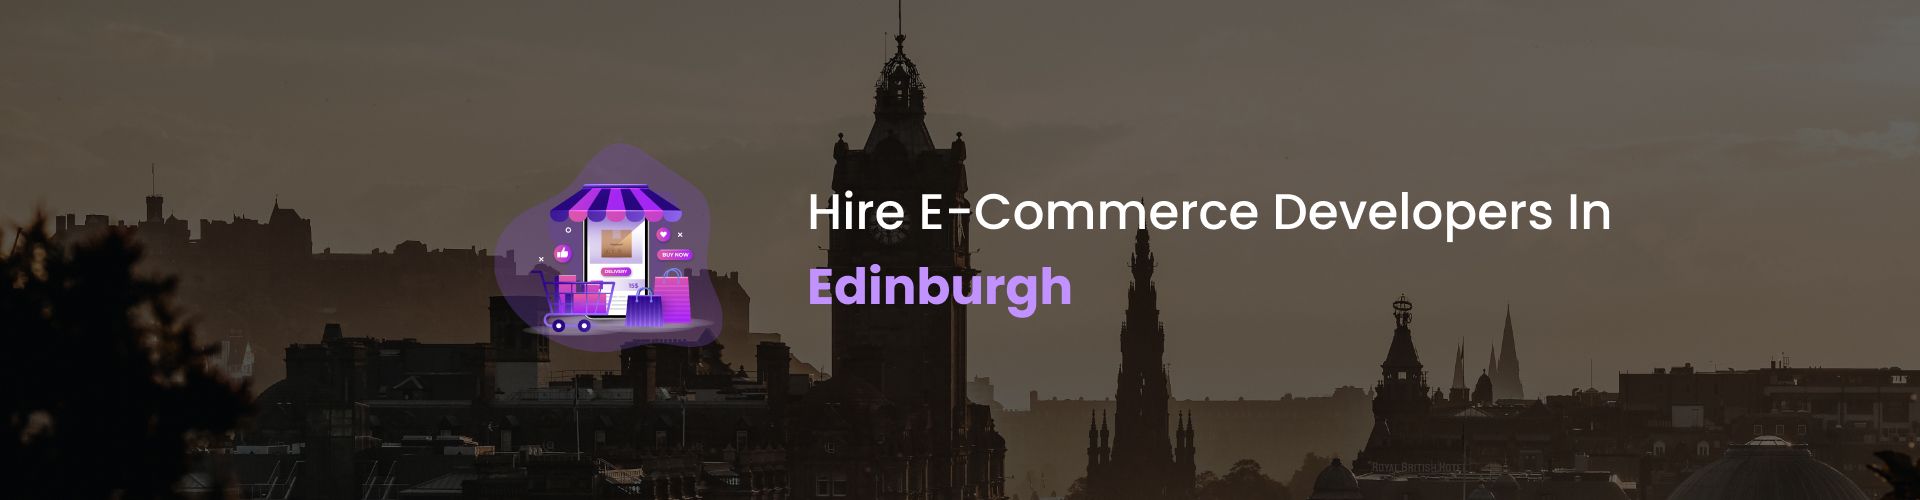 hire ecommerce developers in edinburgh